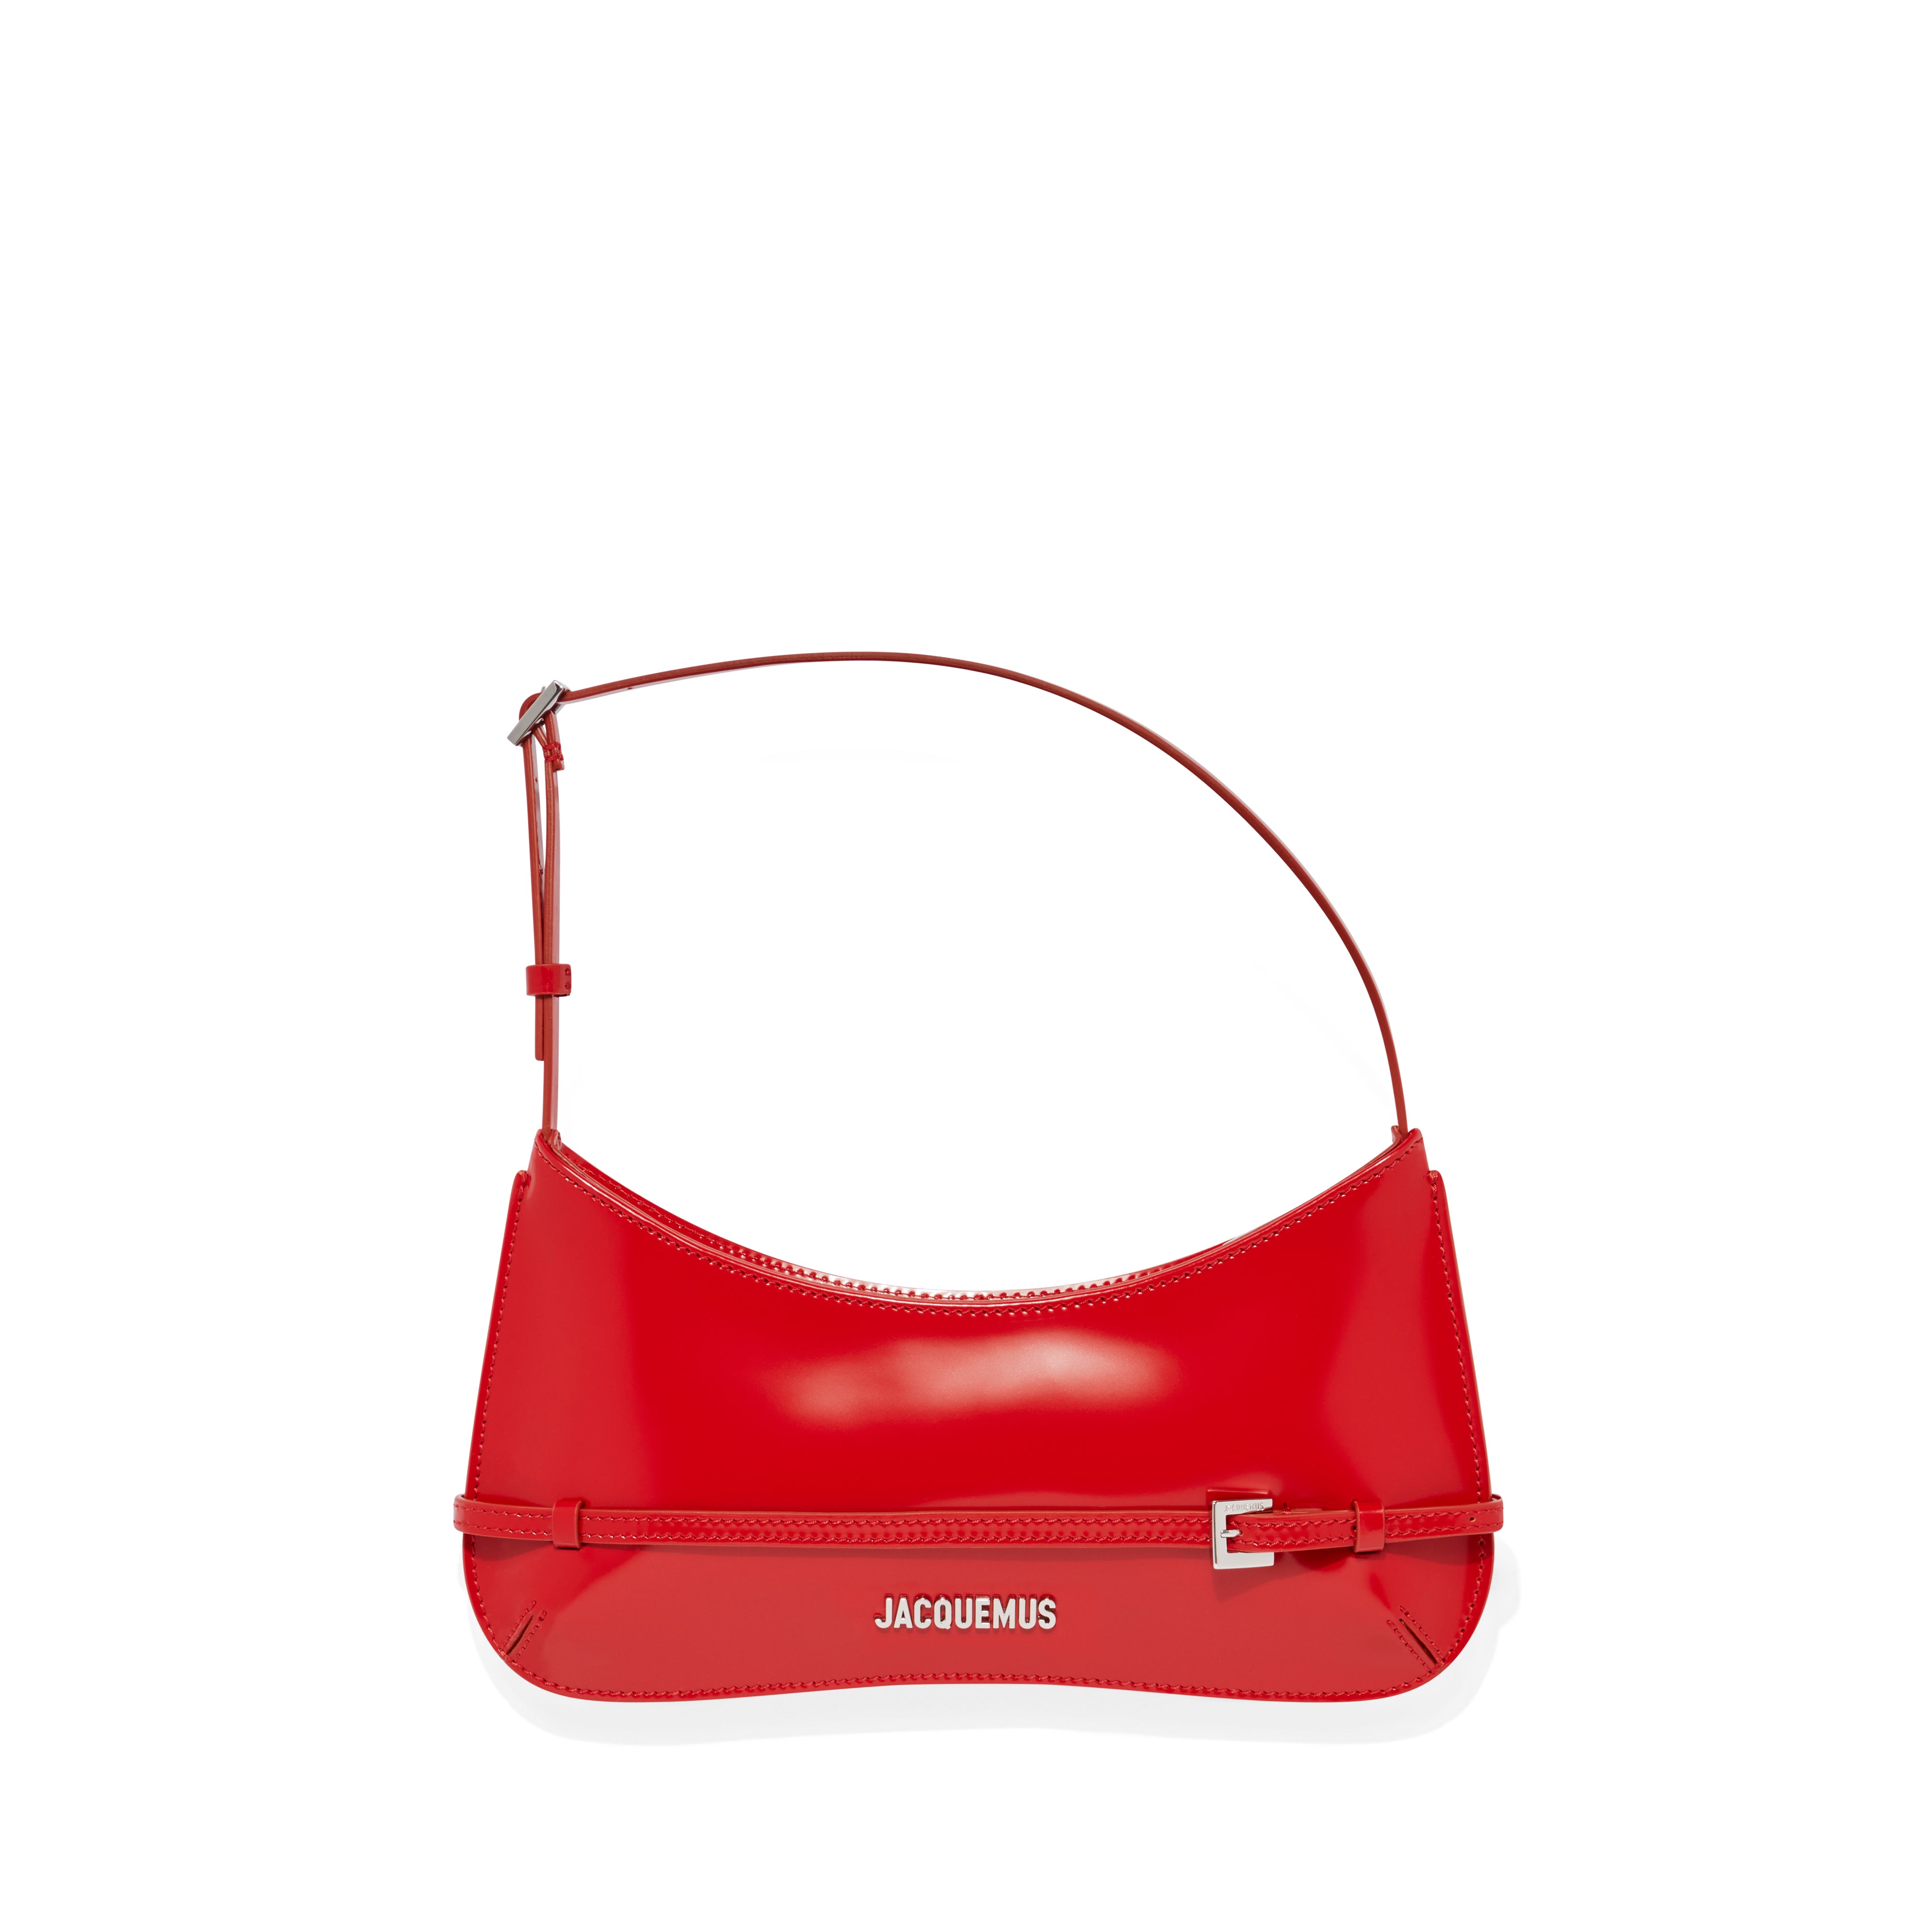 Le Bisou Ceinture Patent Leather Shoulder Bag in Red - Jacquemus